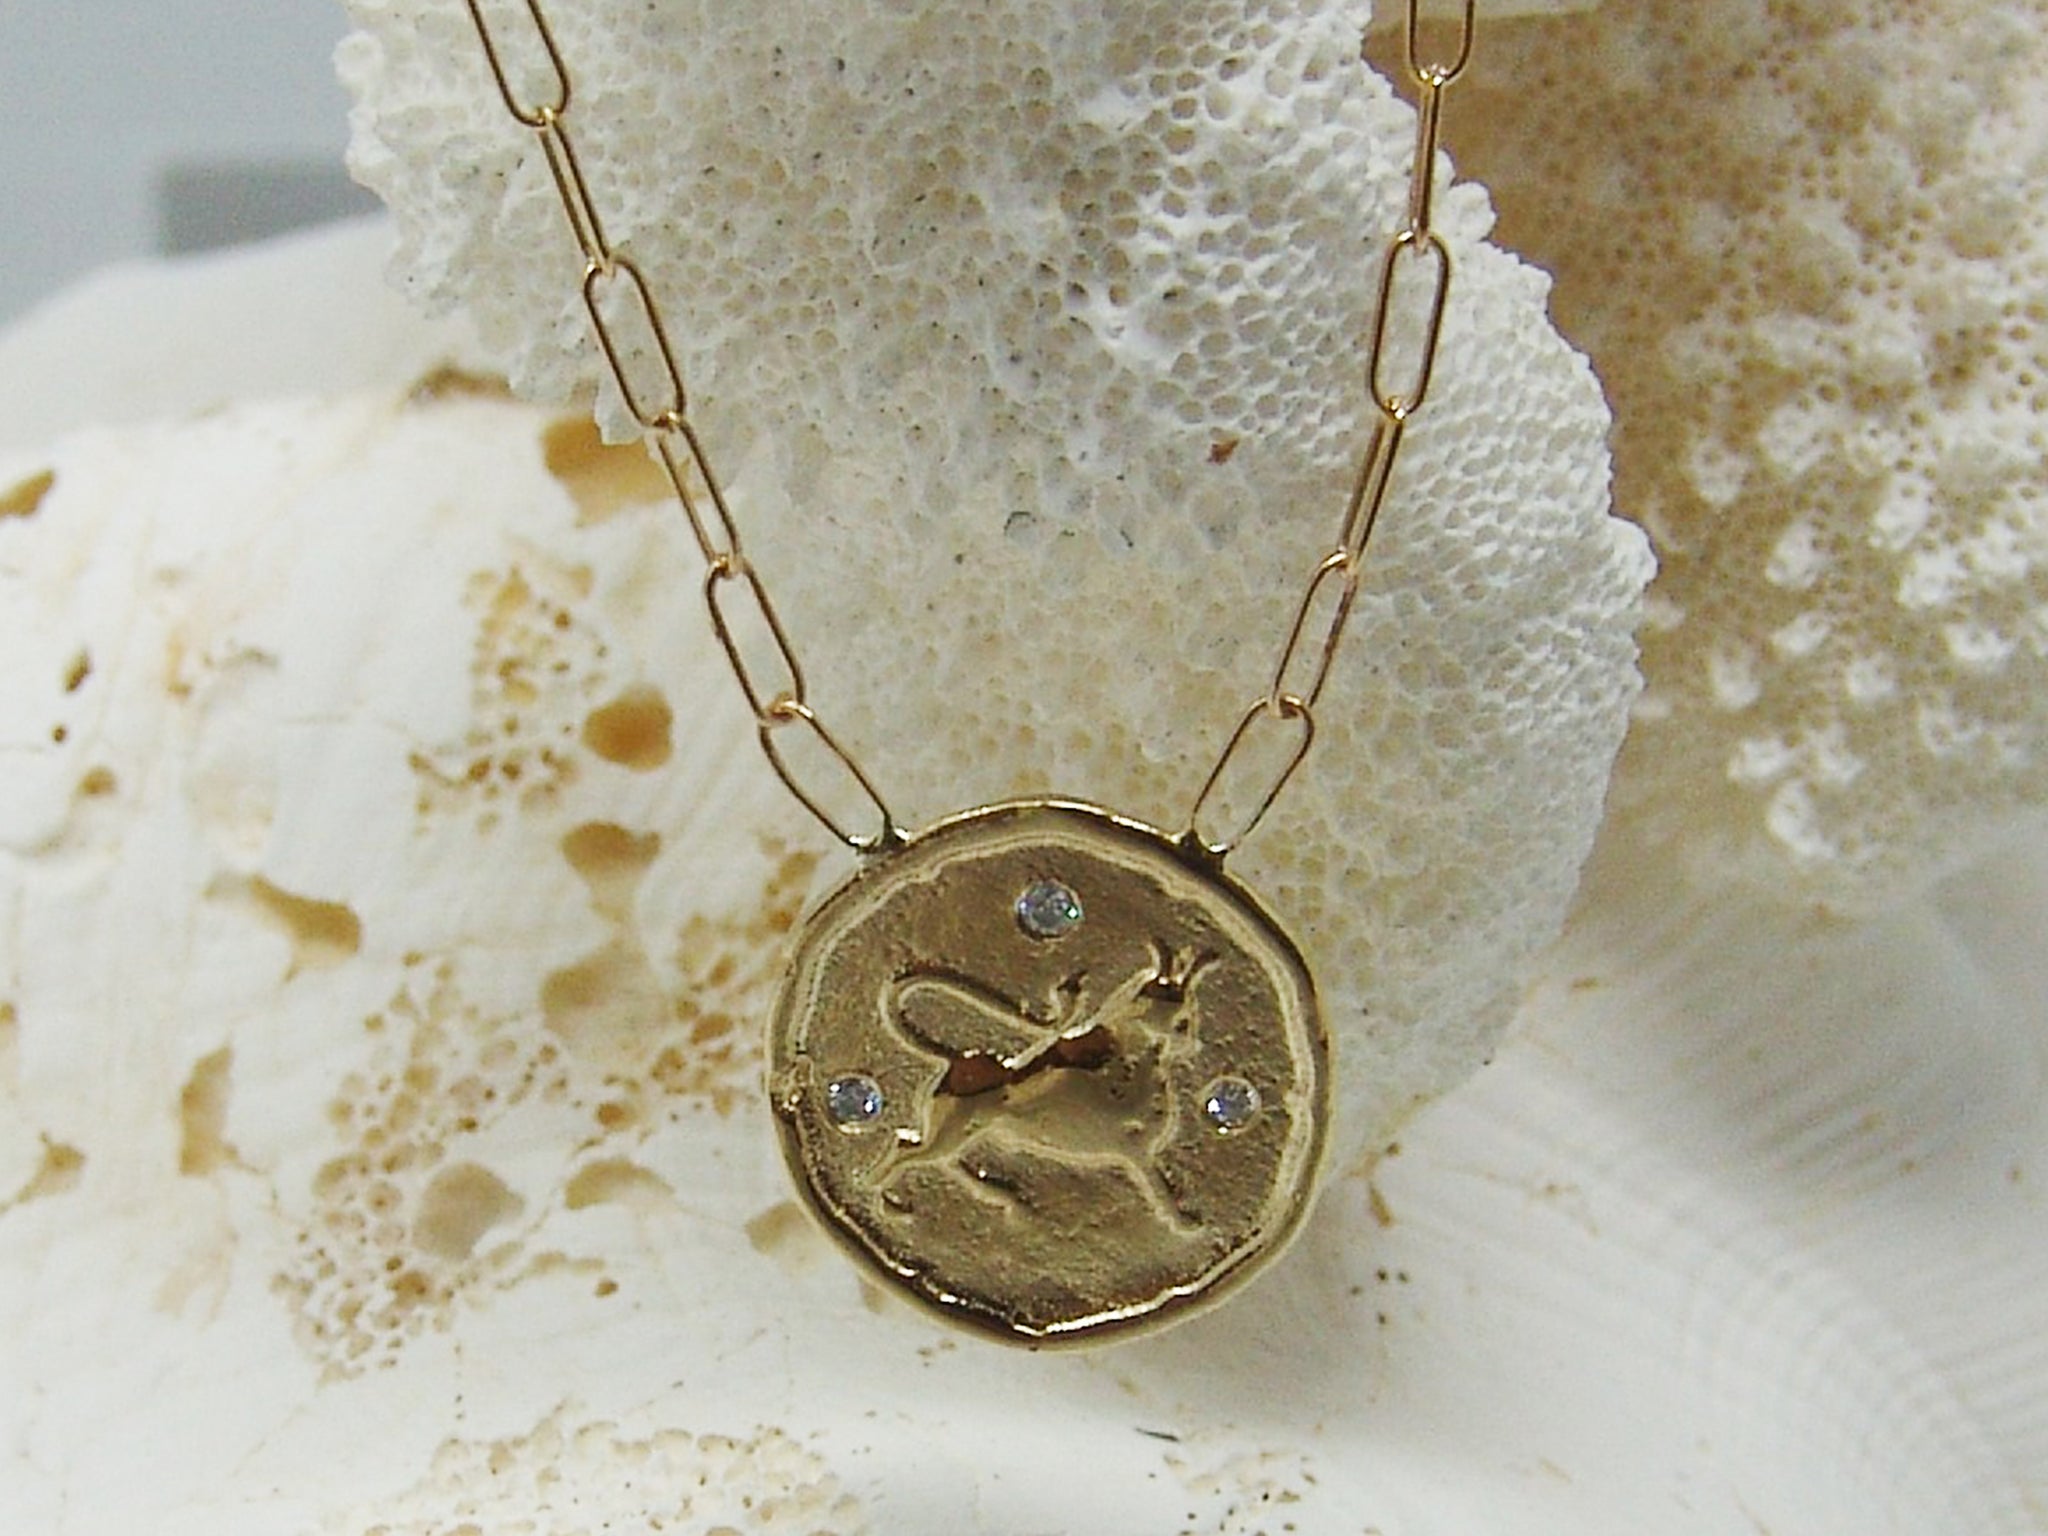 Taurus (Bull) Astrology Necklace